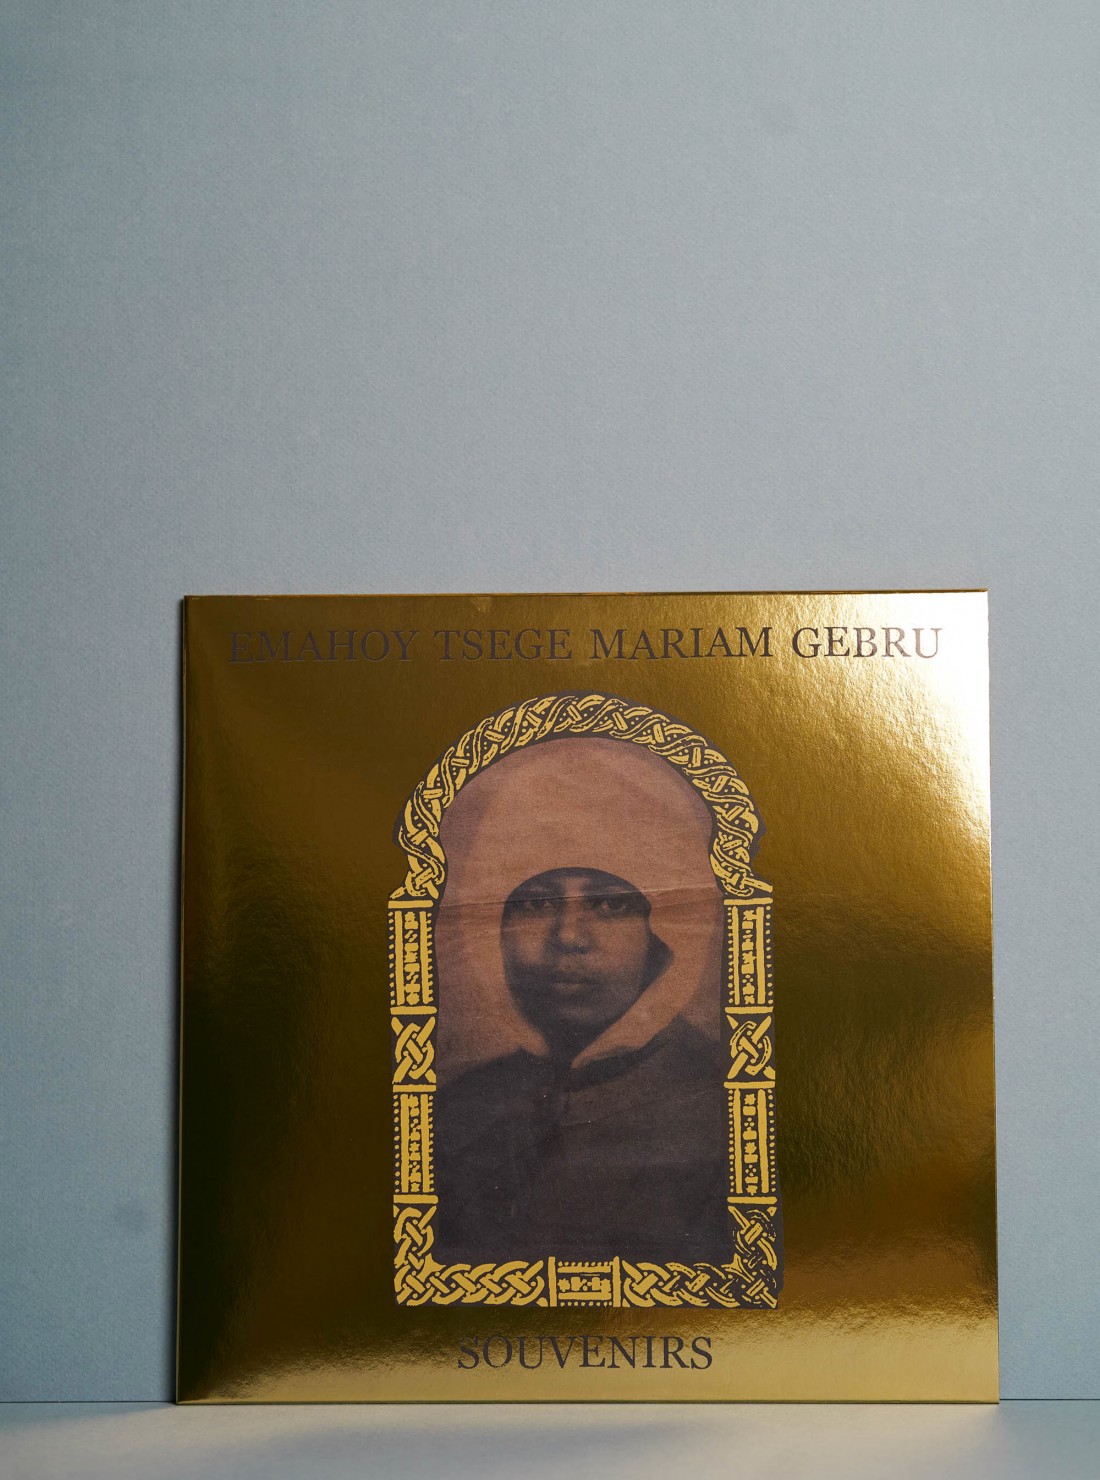 Souvenirs Lp Emahoy Tsege Mariam Gebru